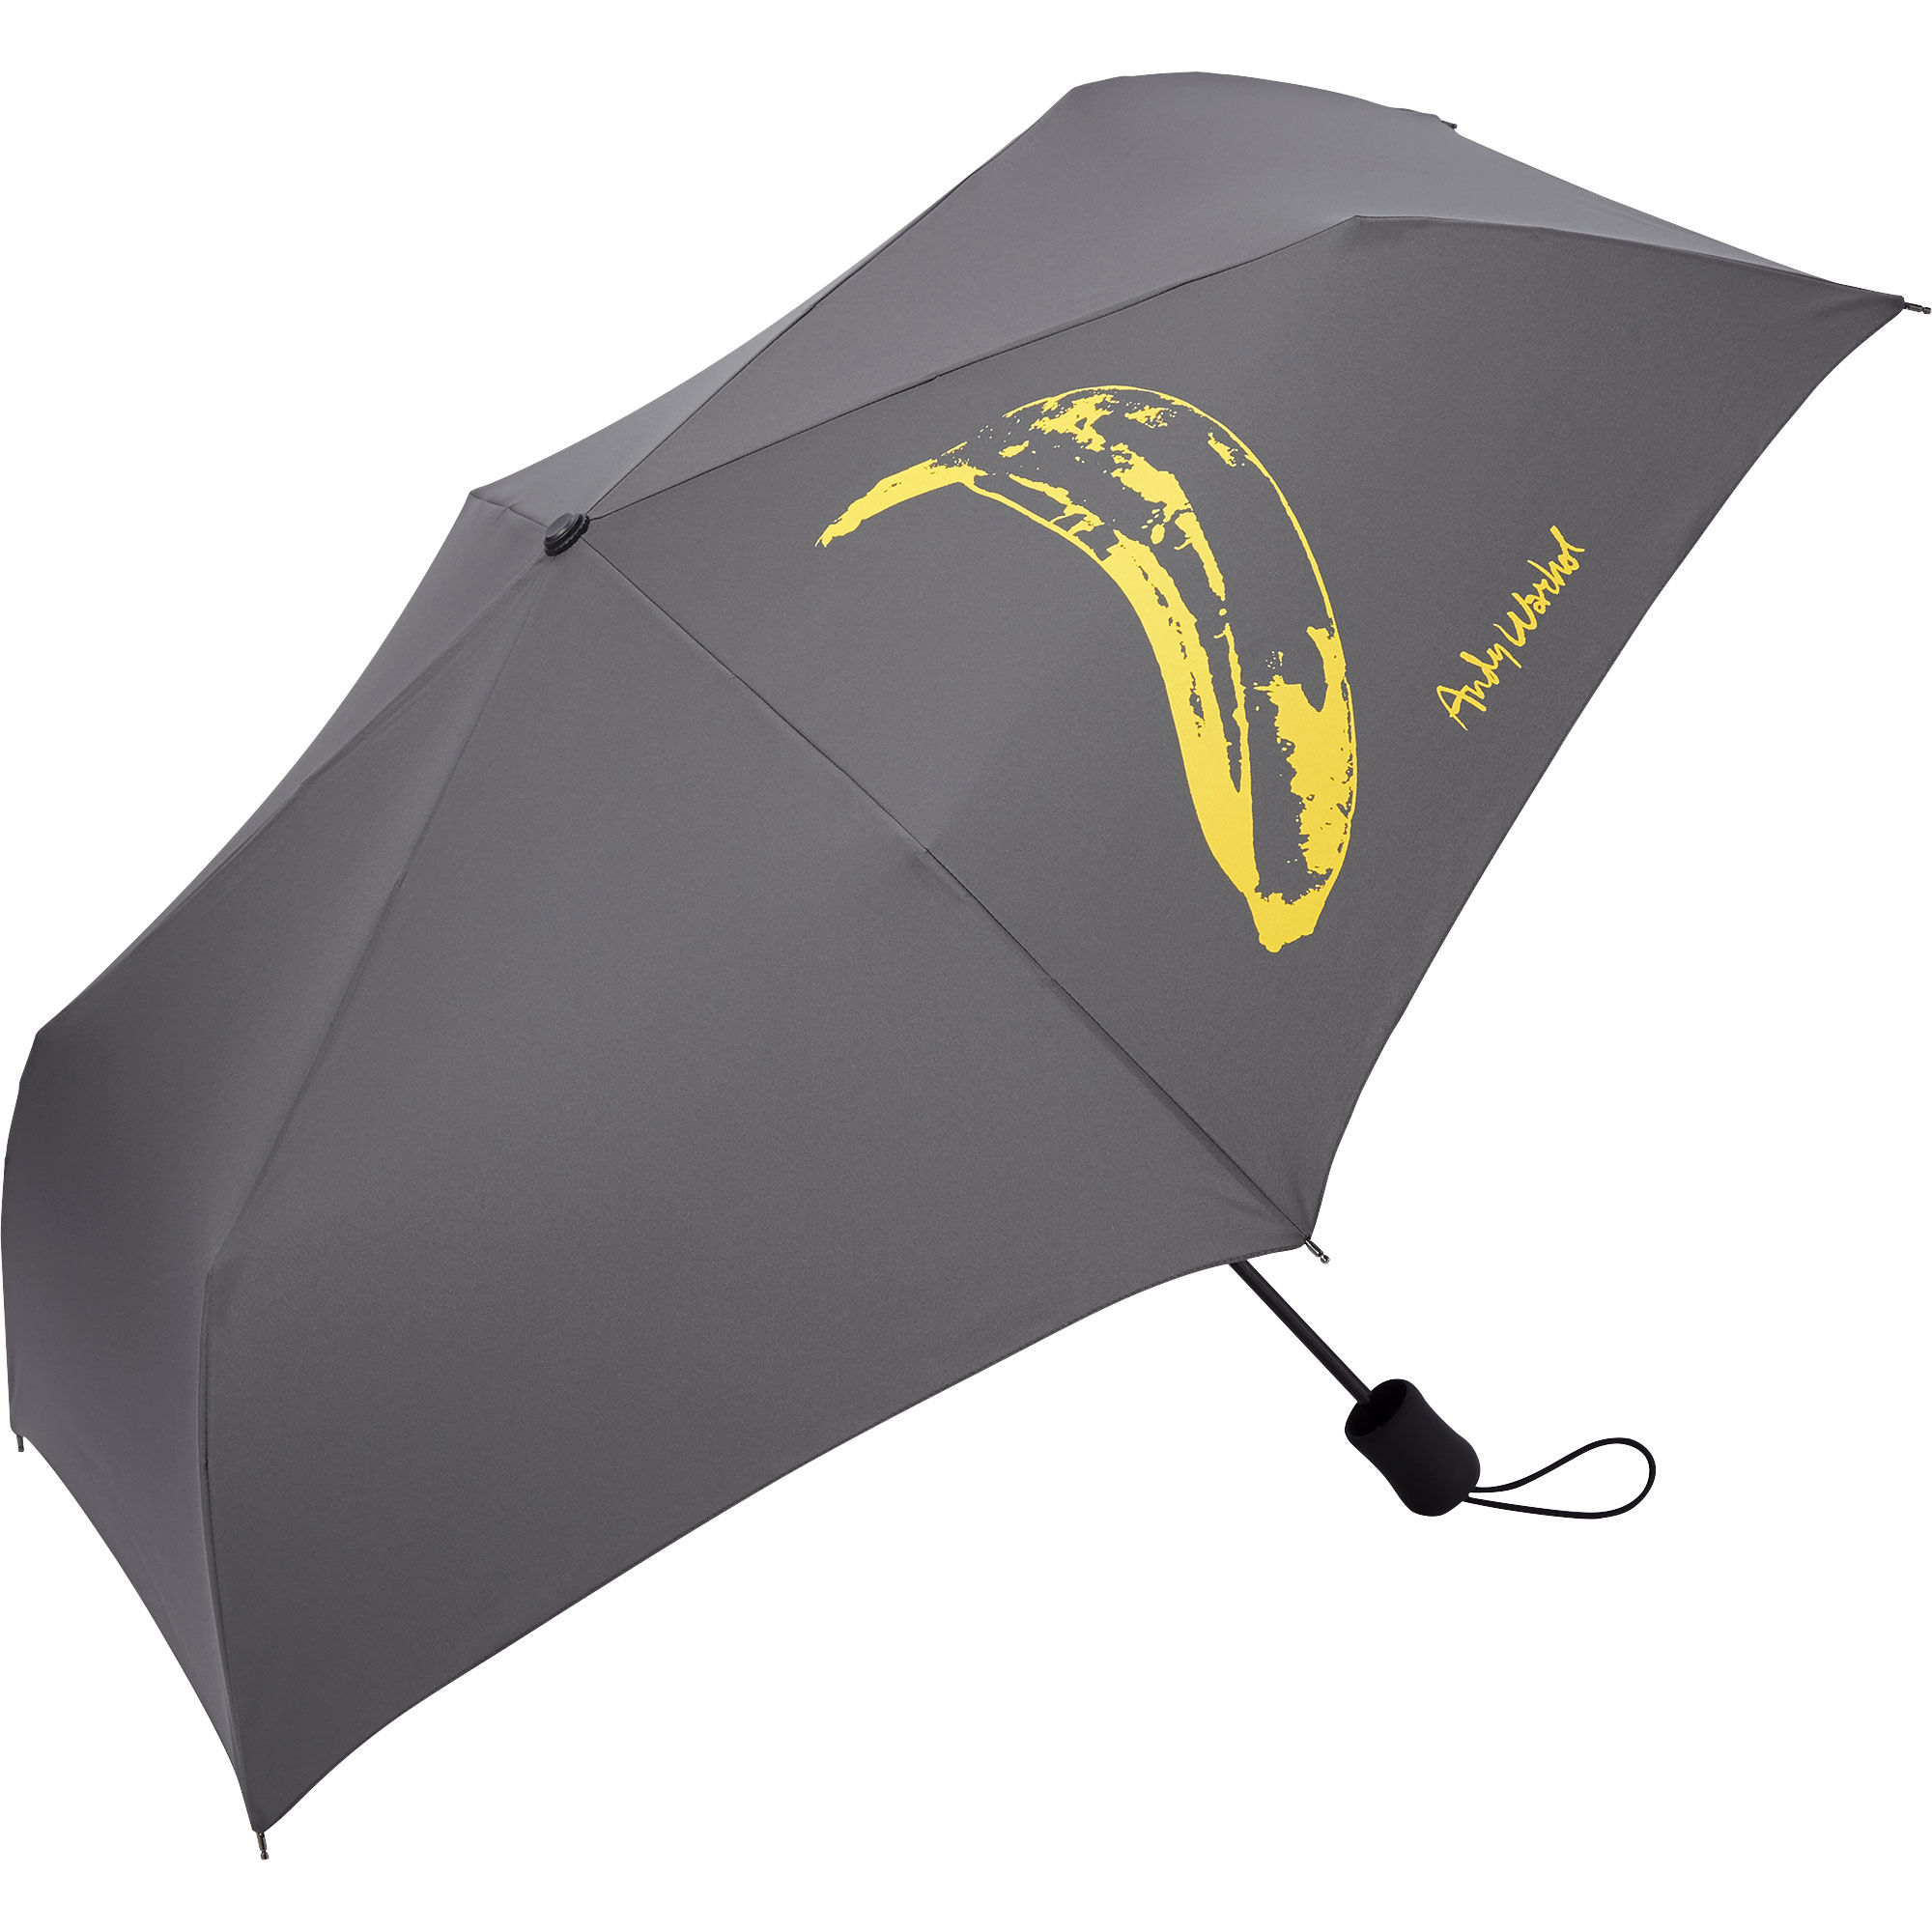 Uniqlo, Andy Warhol, umbrella